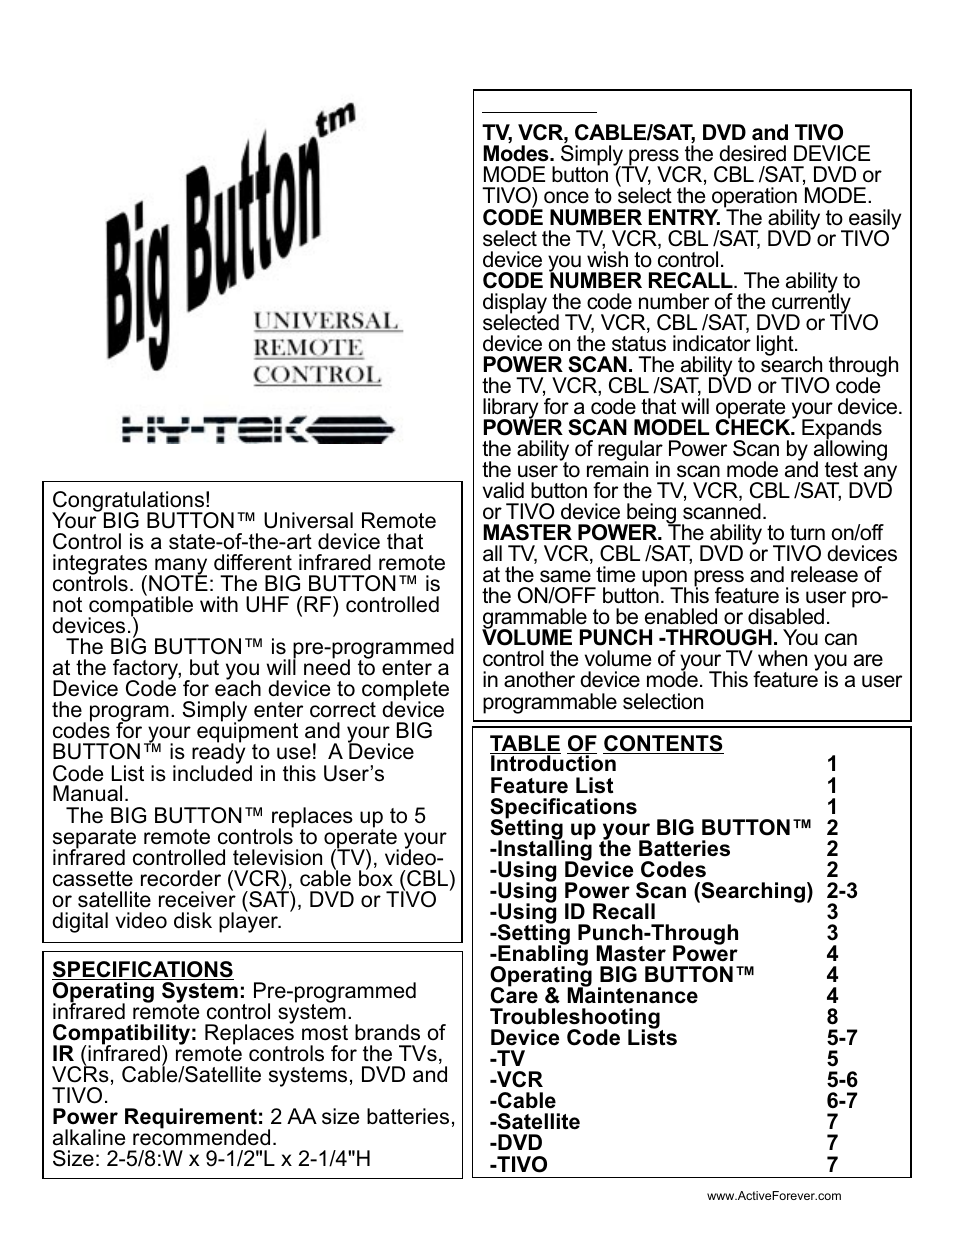 Activeforever HyTek Big Button TV Remote Control User Manual | 10 pages